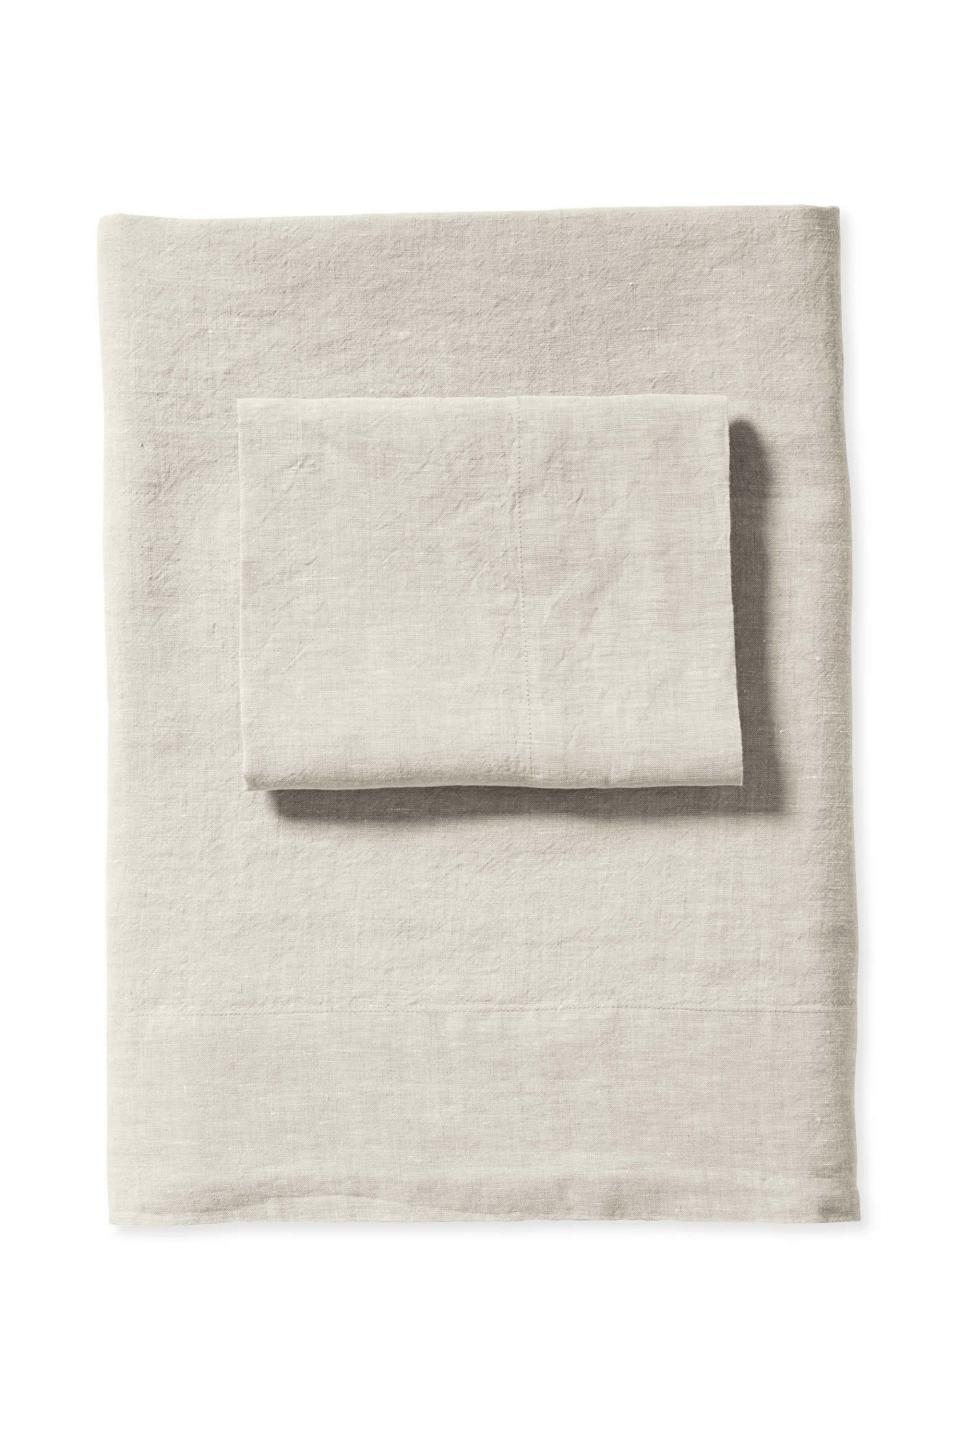 12) Cavallo Linen Sheet Set